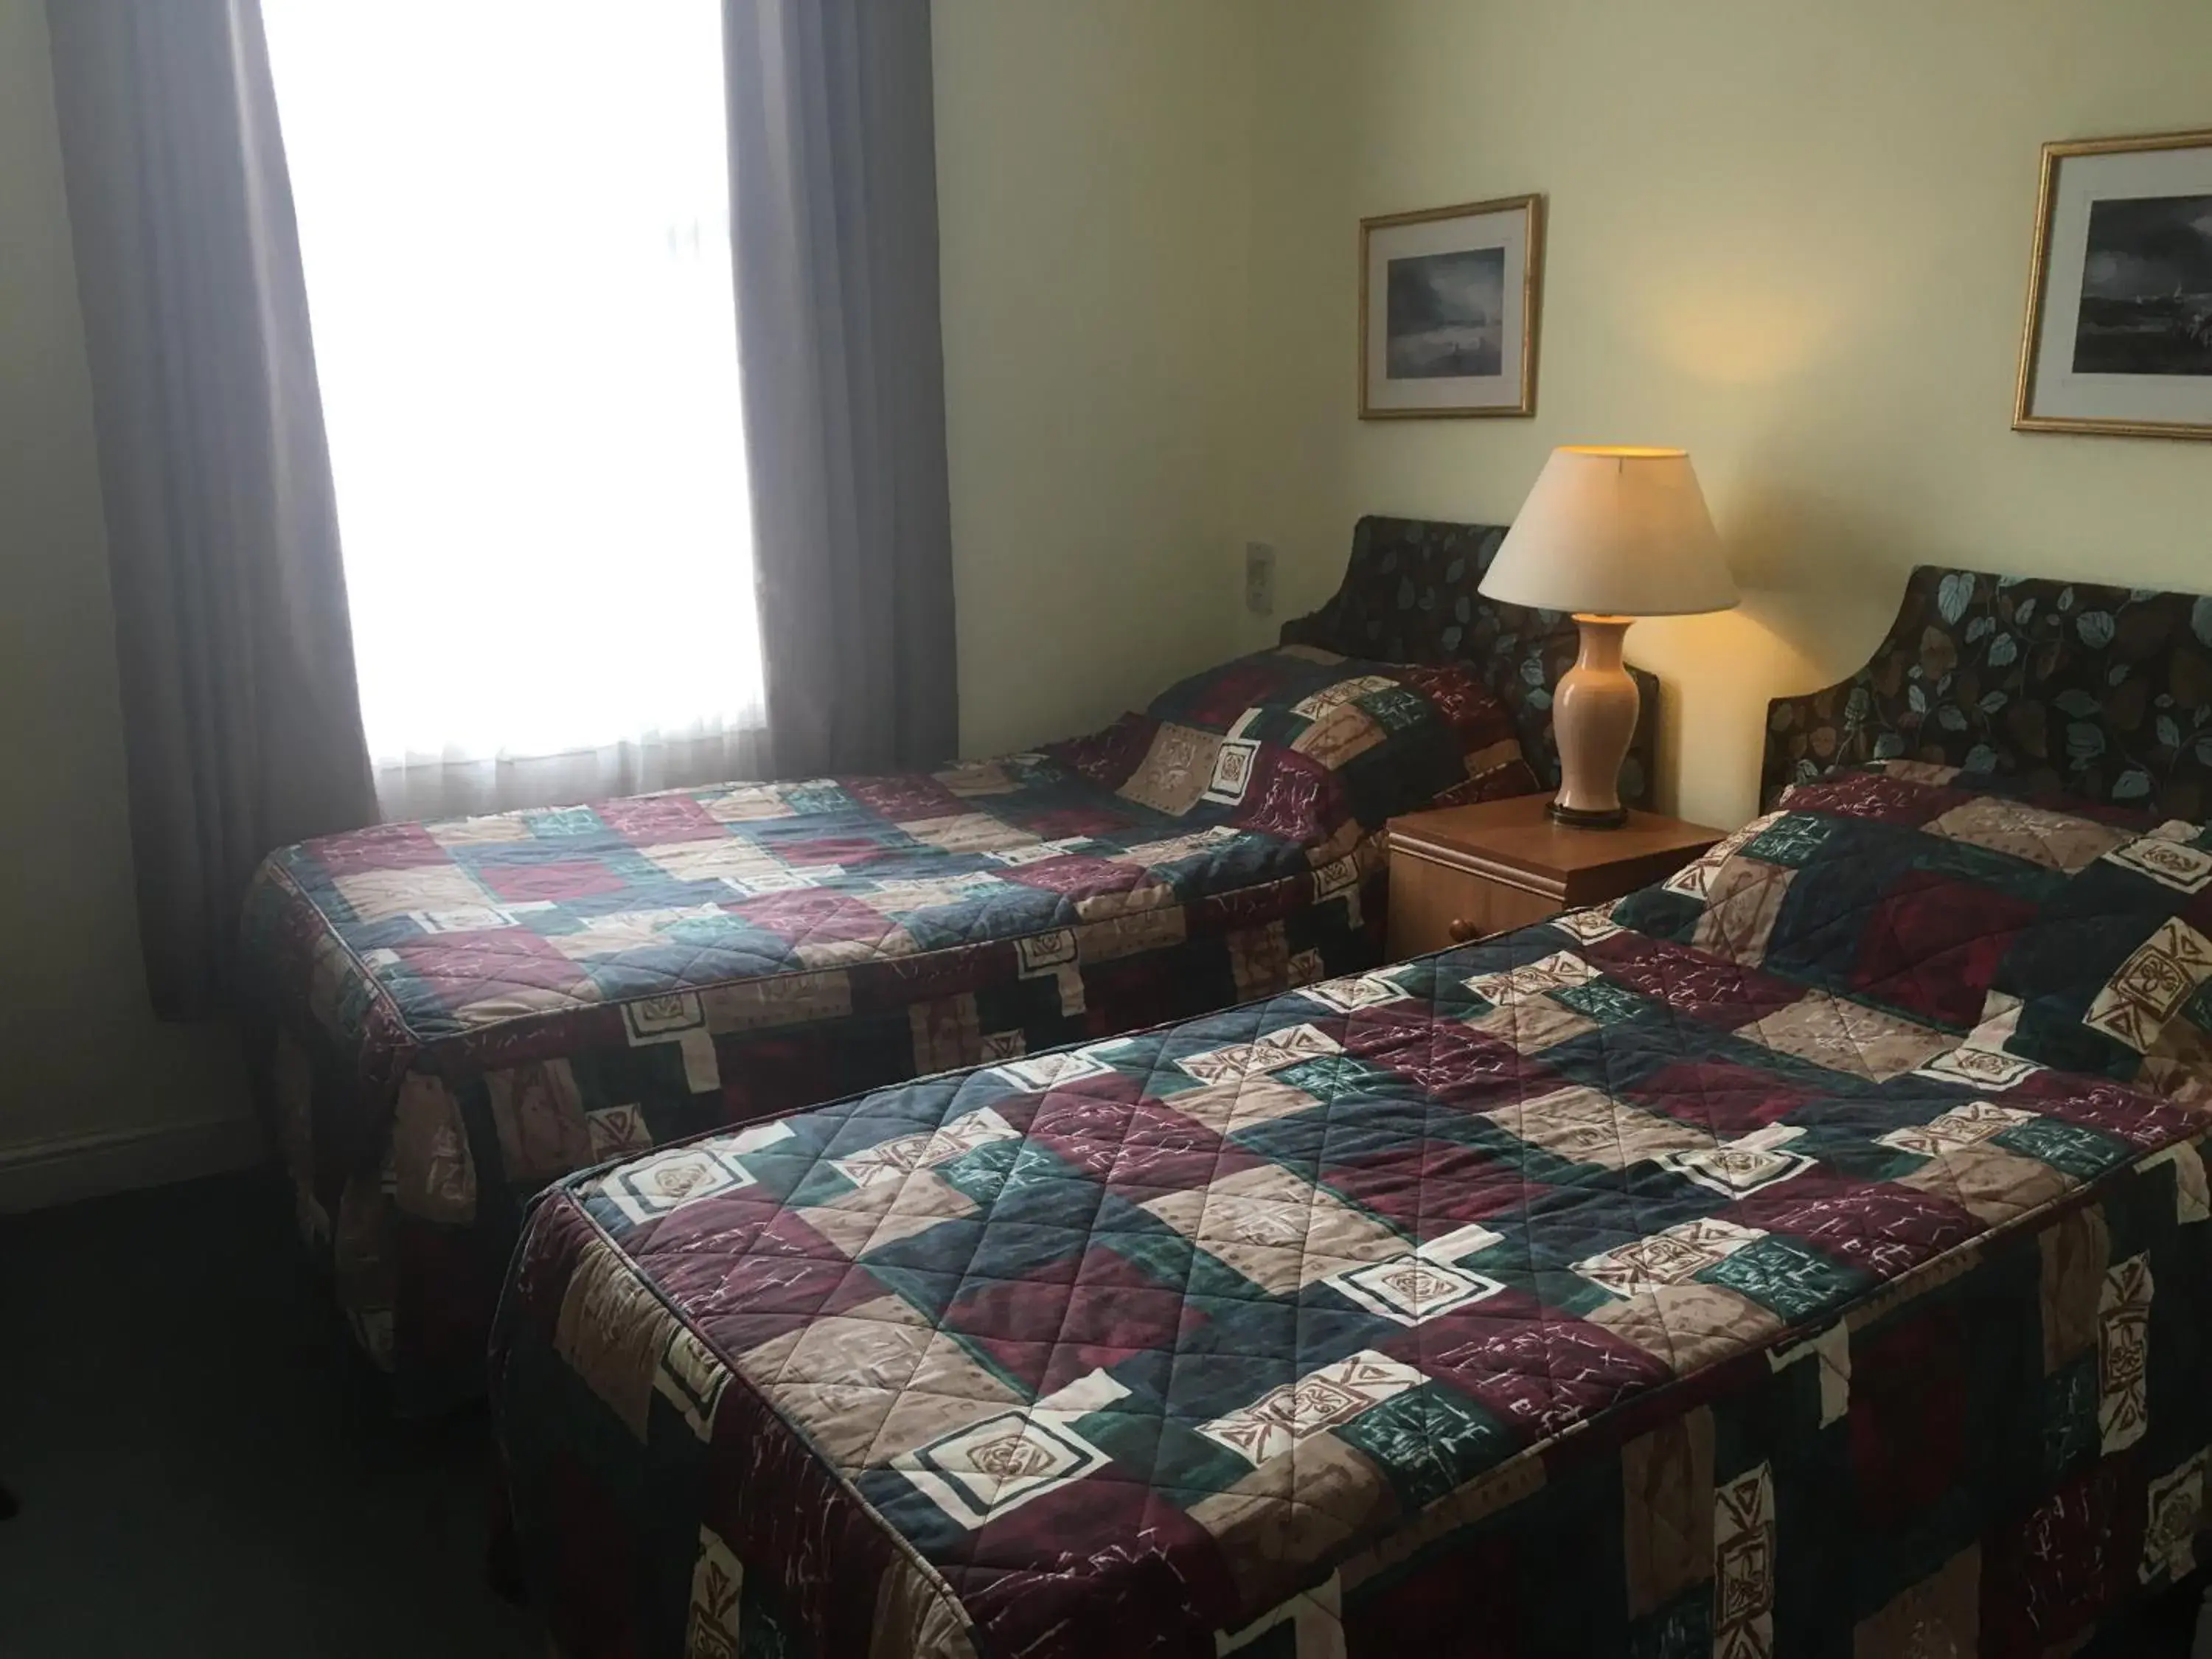 Bed, Room Photo in Dukes Head Inn